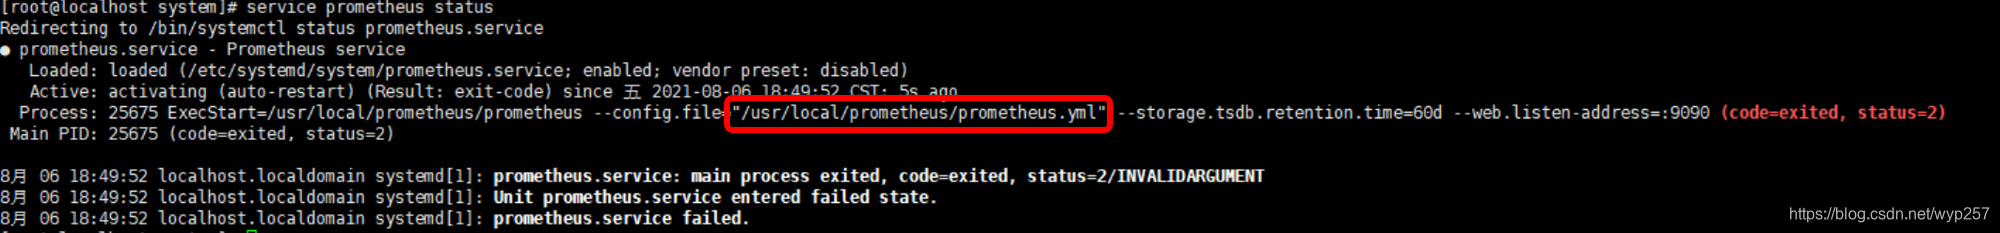 prometheus_service_error